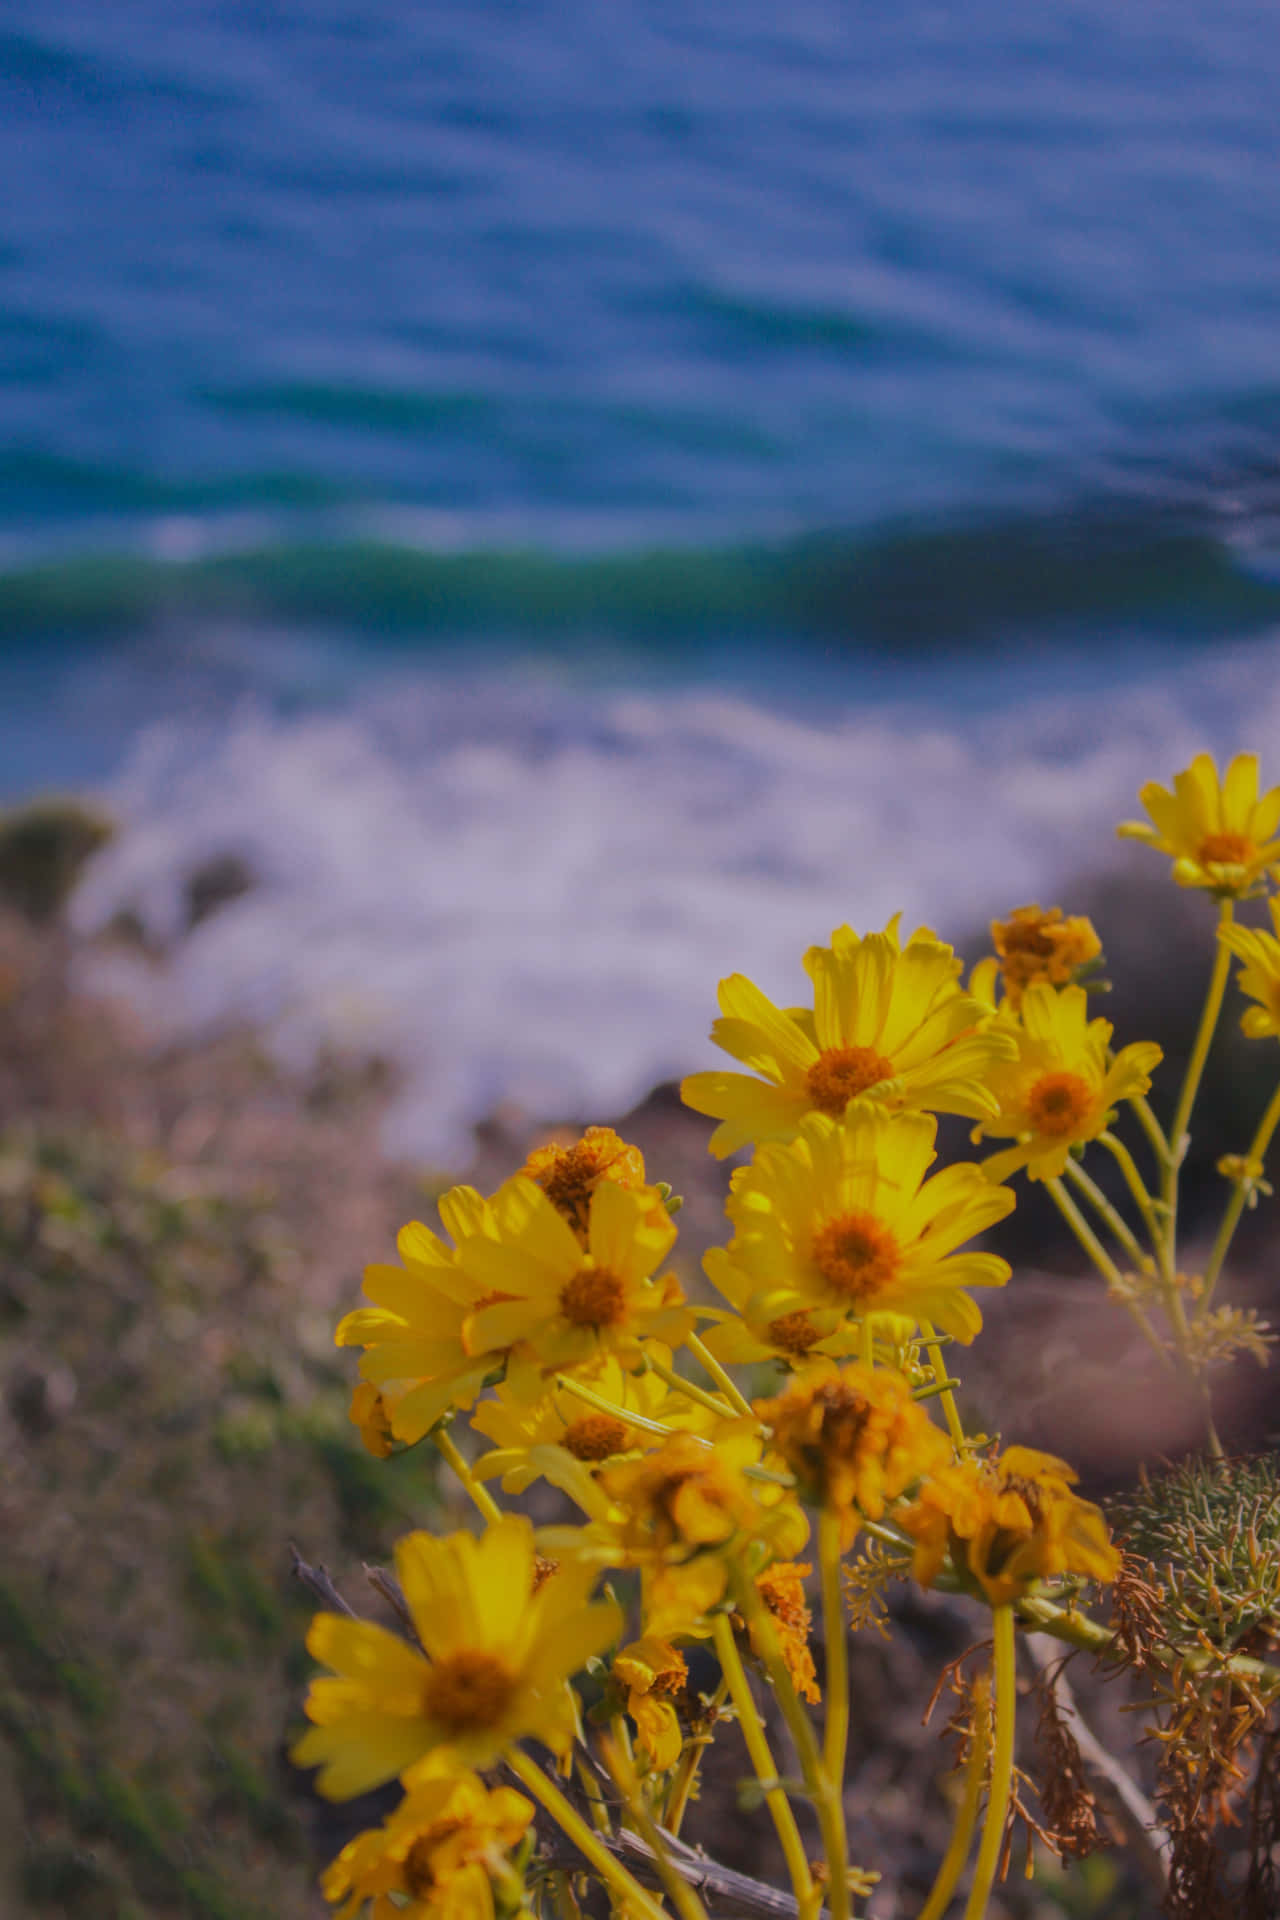 Iphone X Malibu Background With Brittlebush Flower